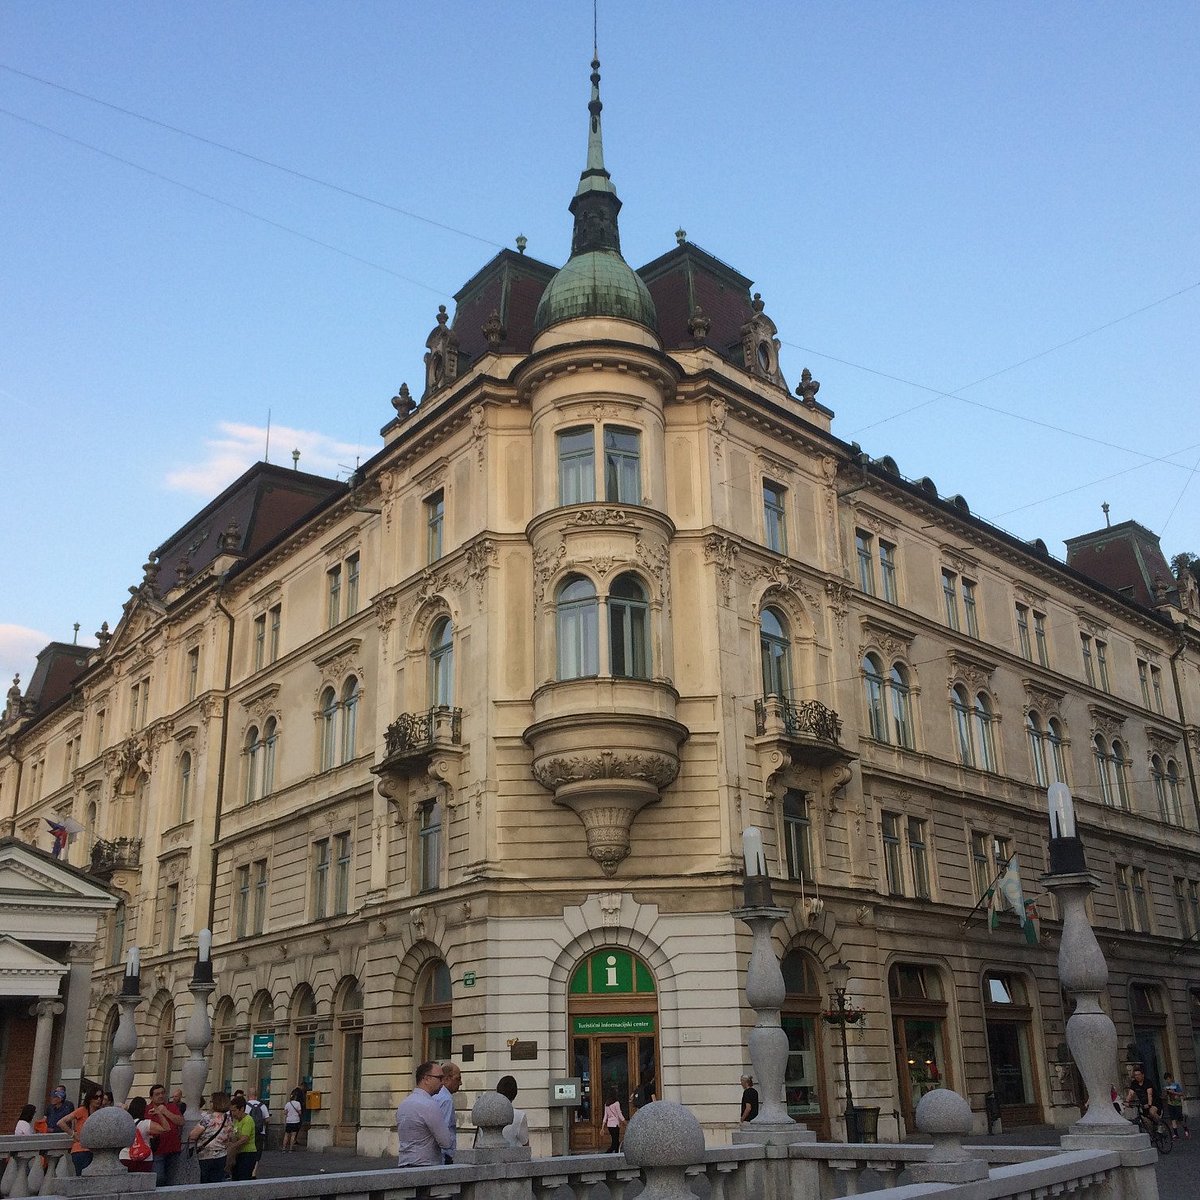 ljubljana tourism office